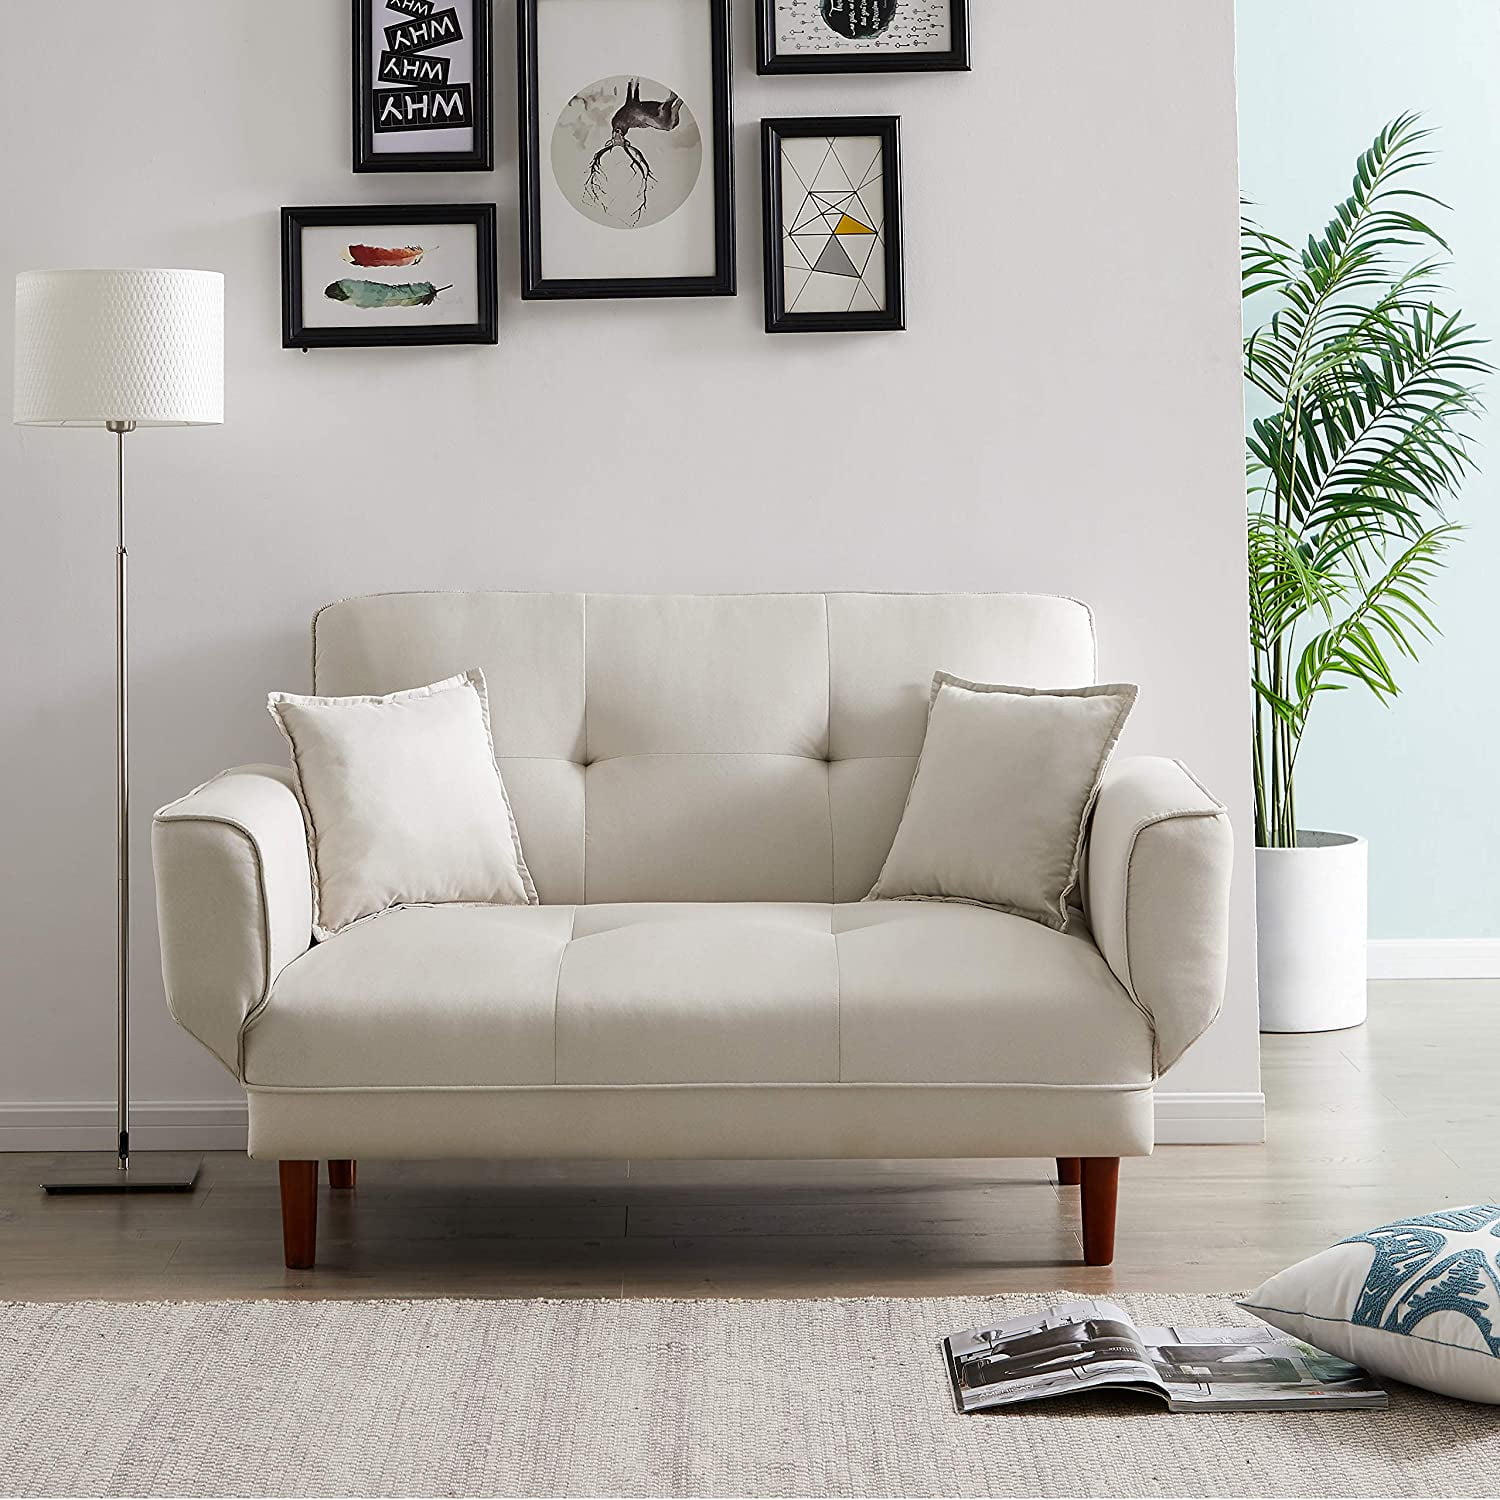 Futon Sofa Bed Couch Mattress Home Bedroom Dorm Apartment Convertible Furniture 